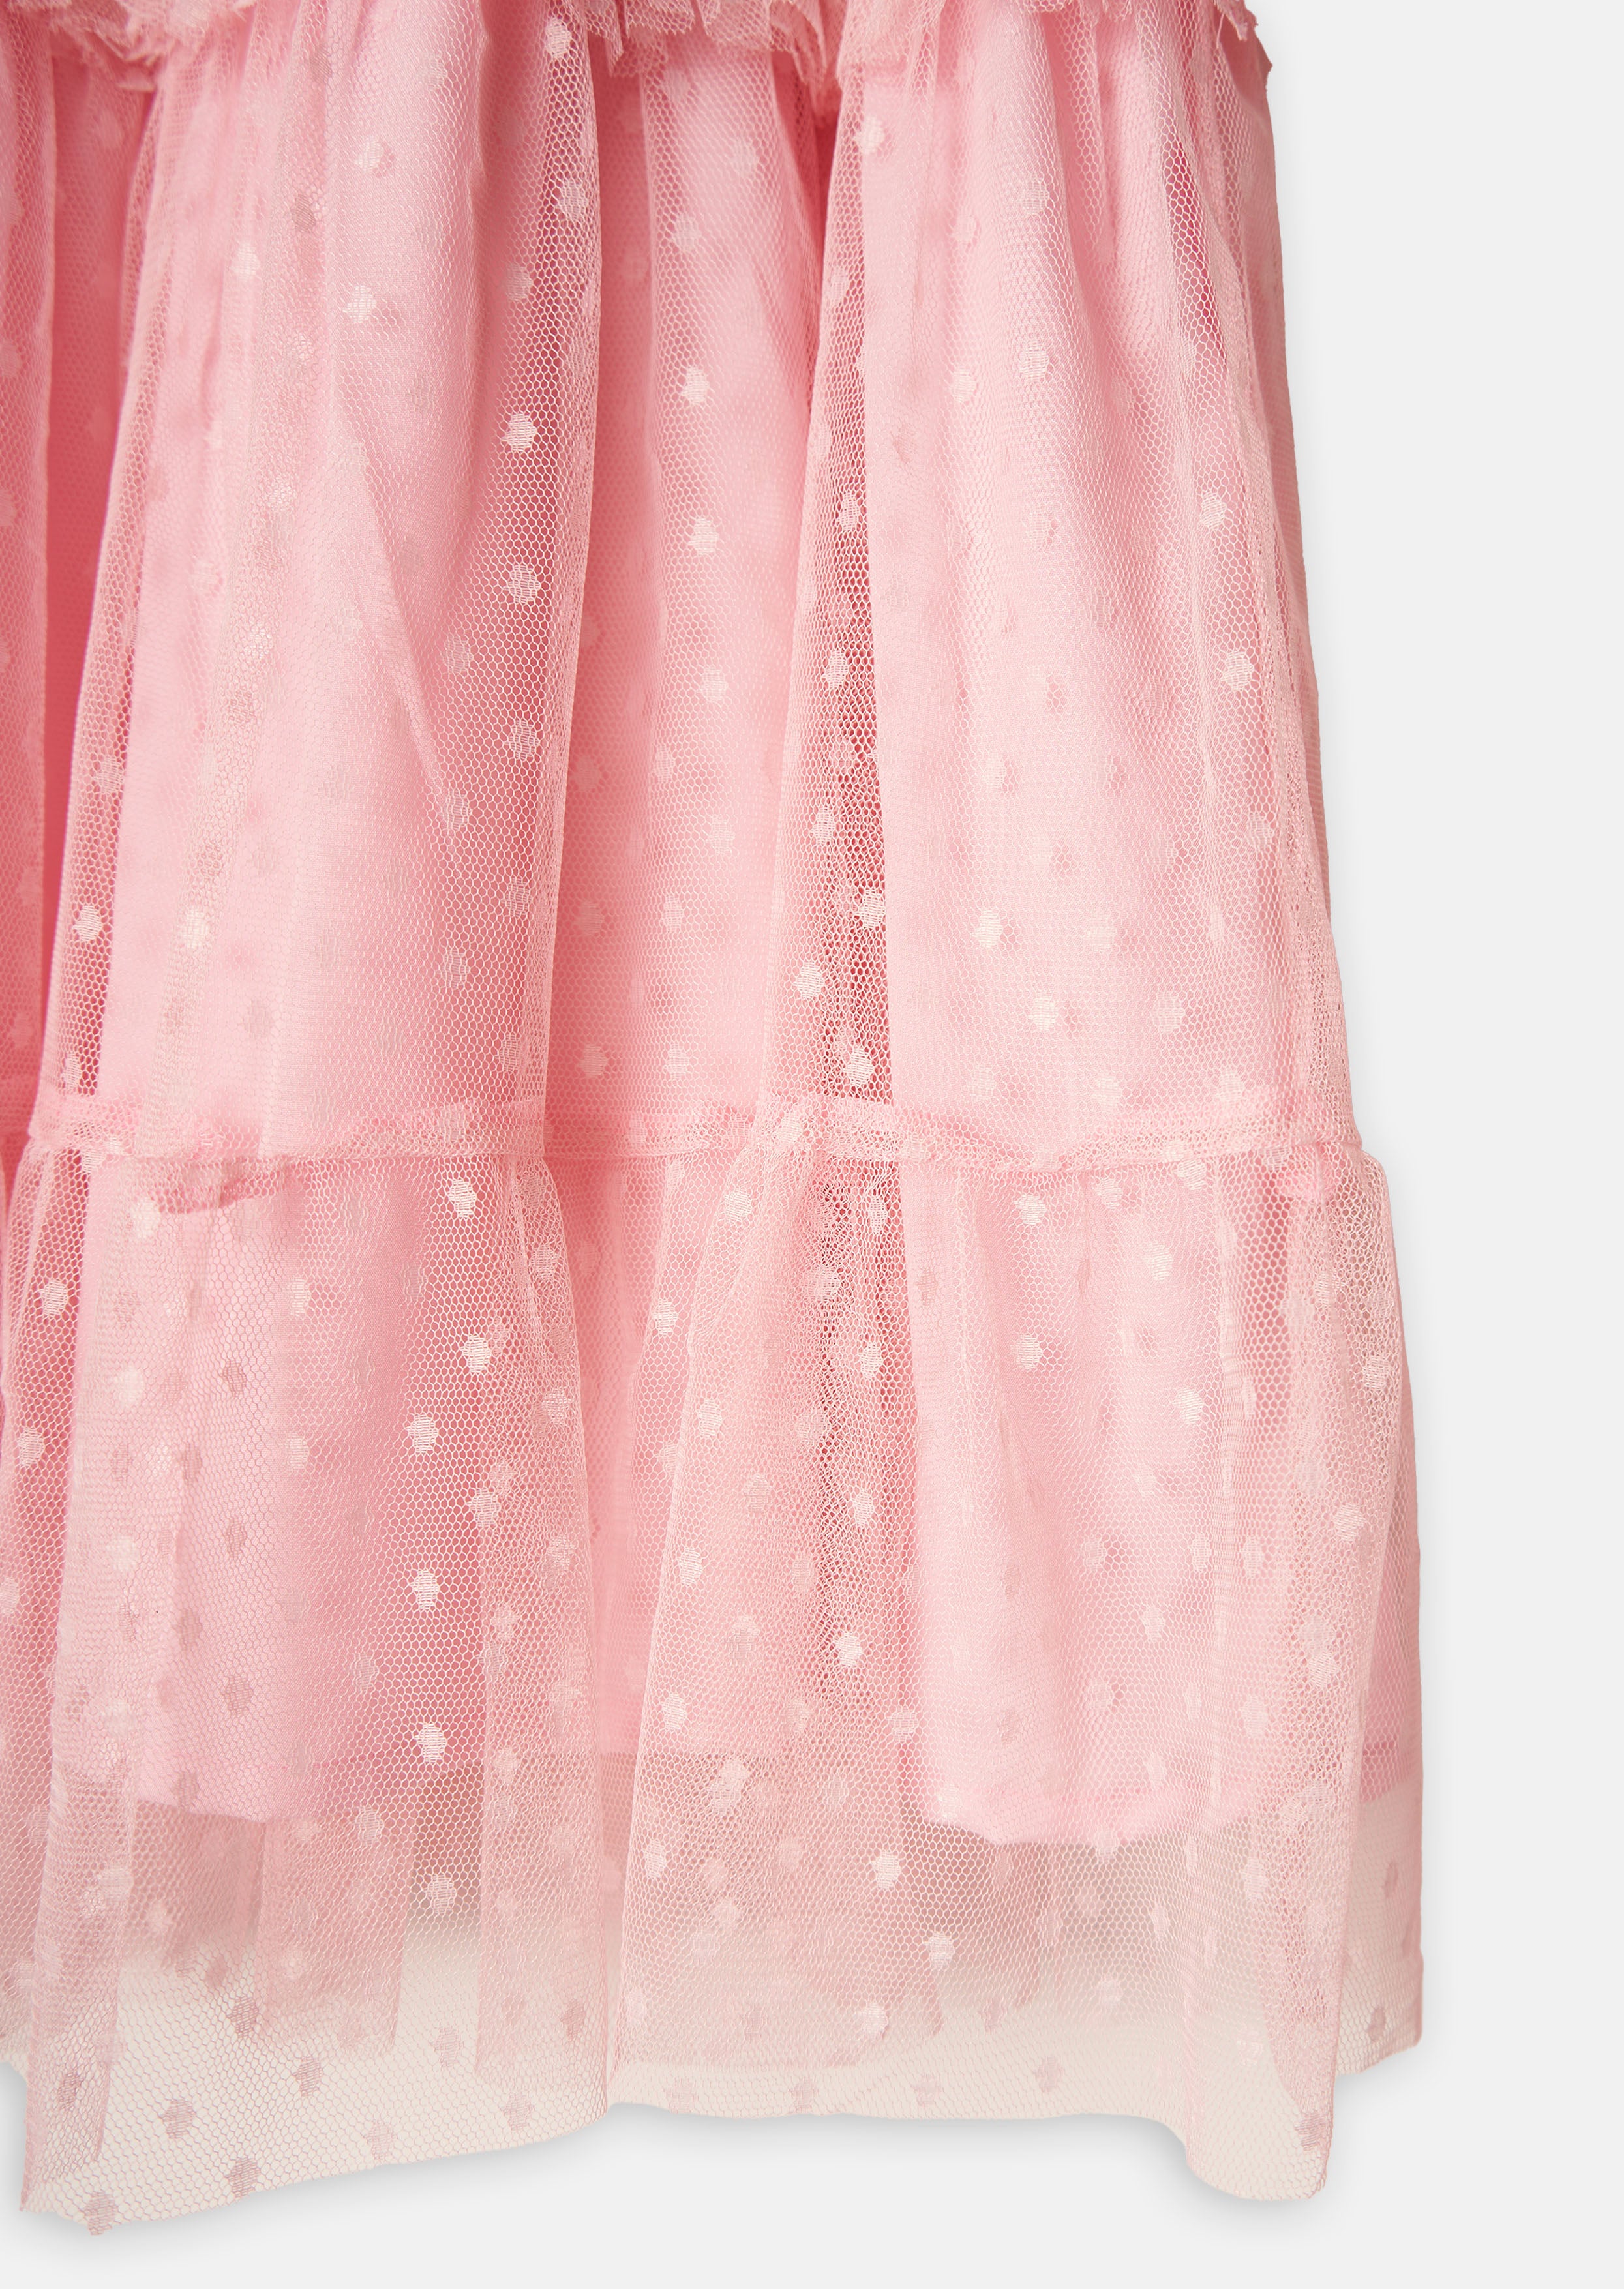 Girls Pink Spot Printed Mesh Dress